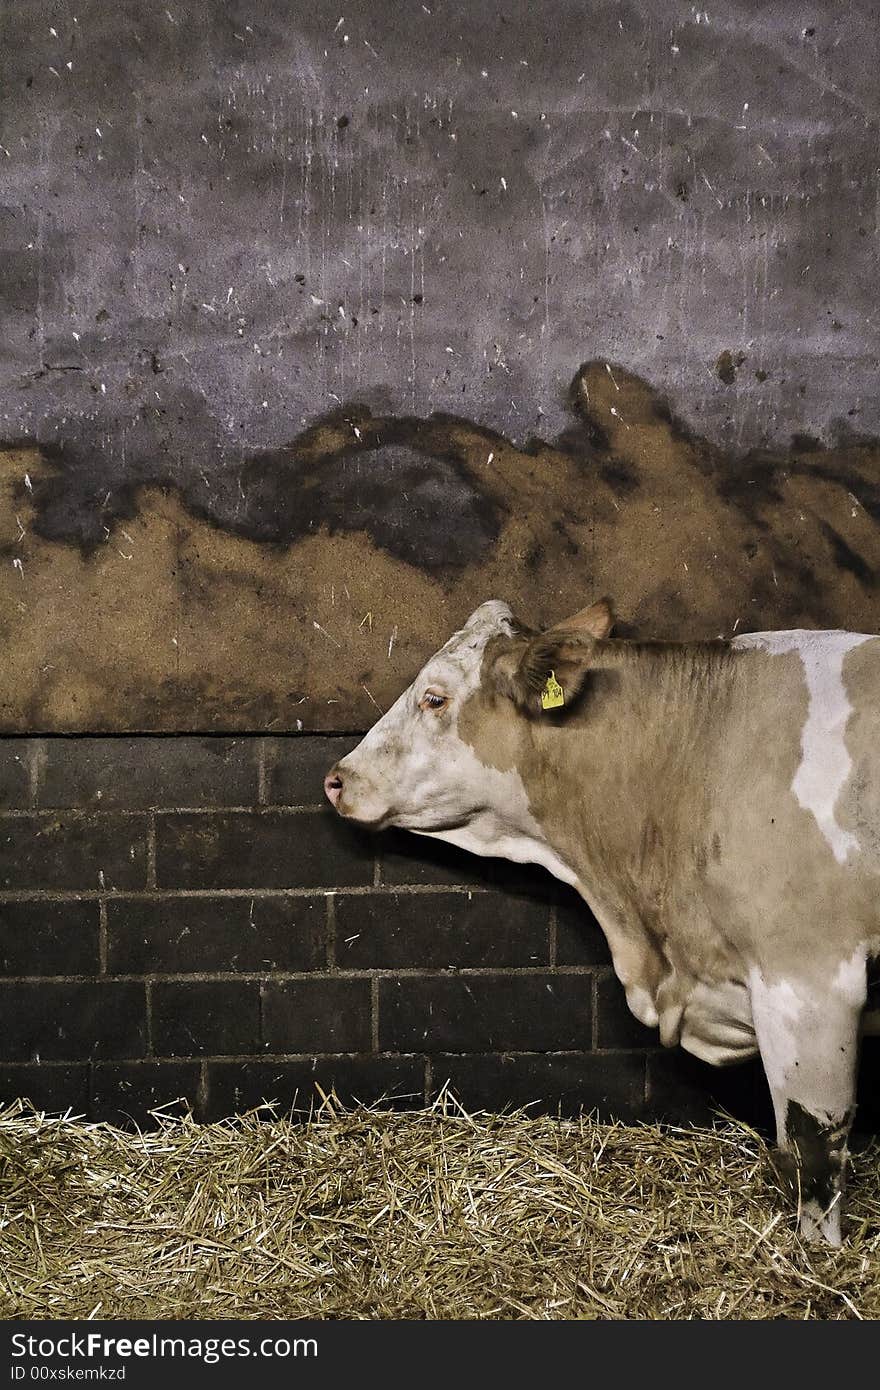 Milk Cow in a cow barn